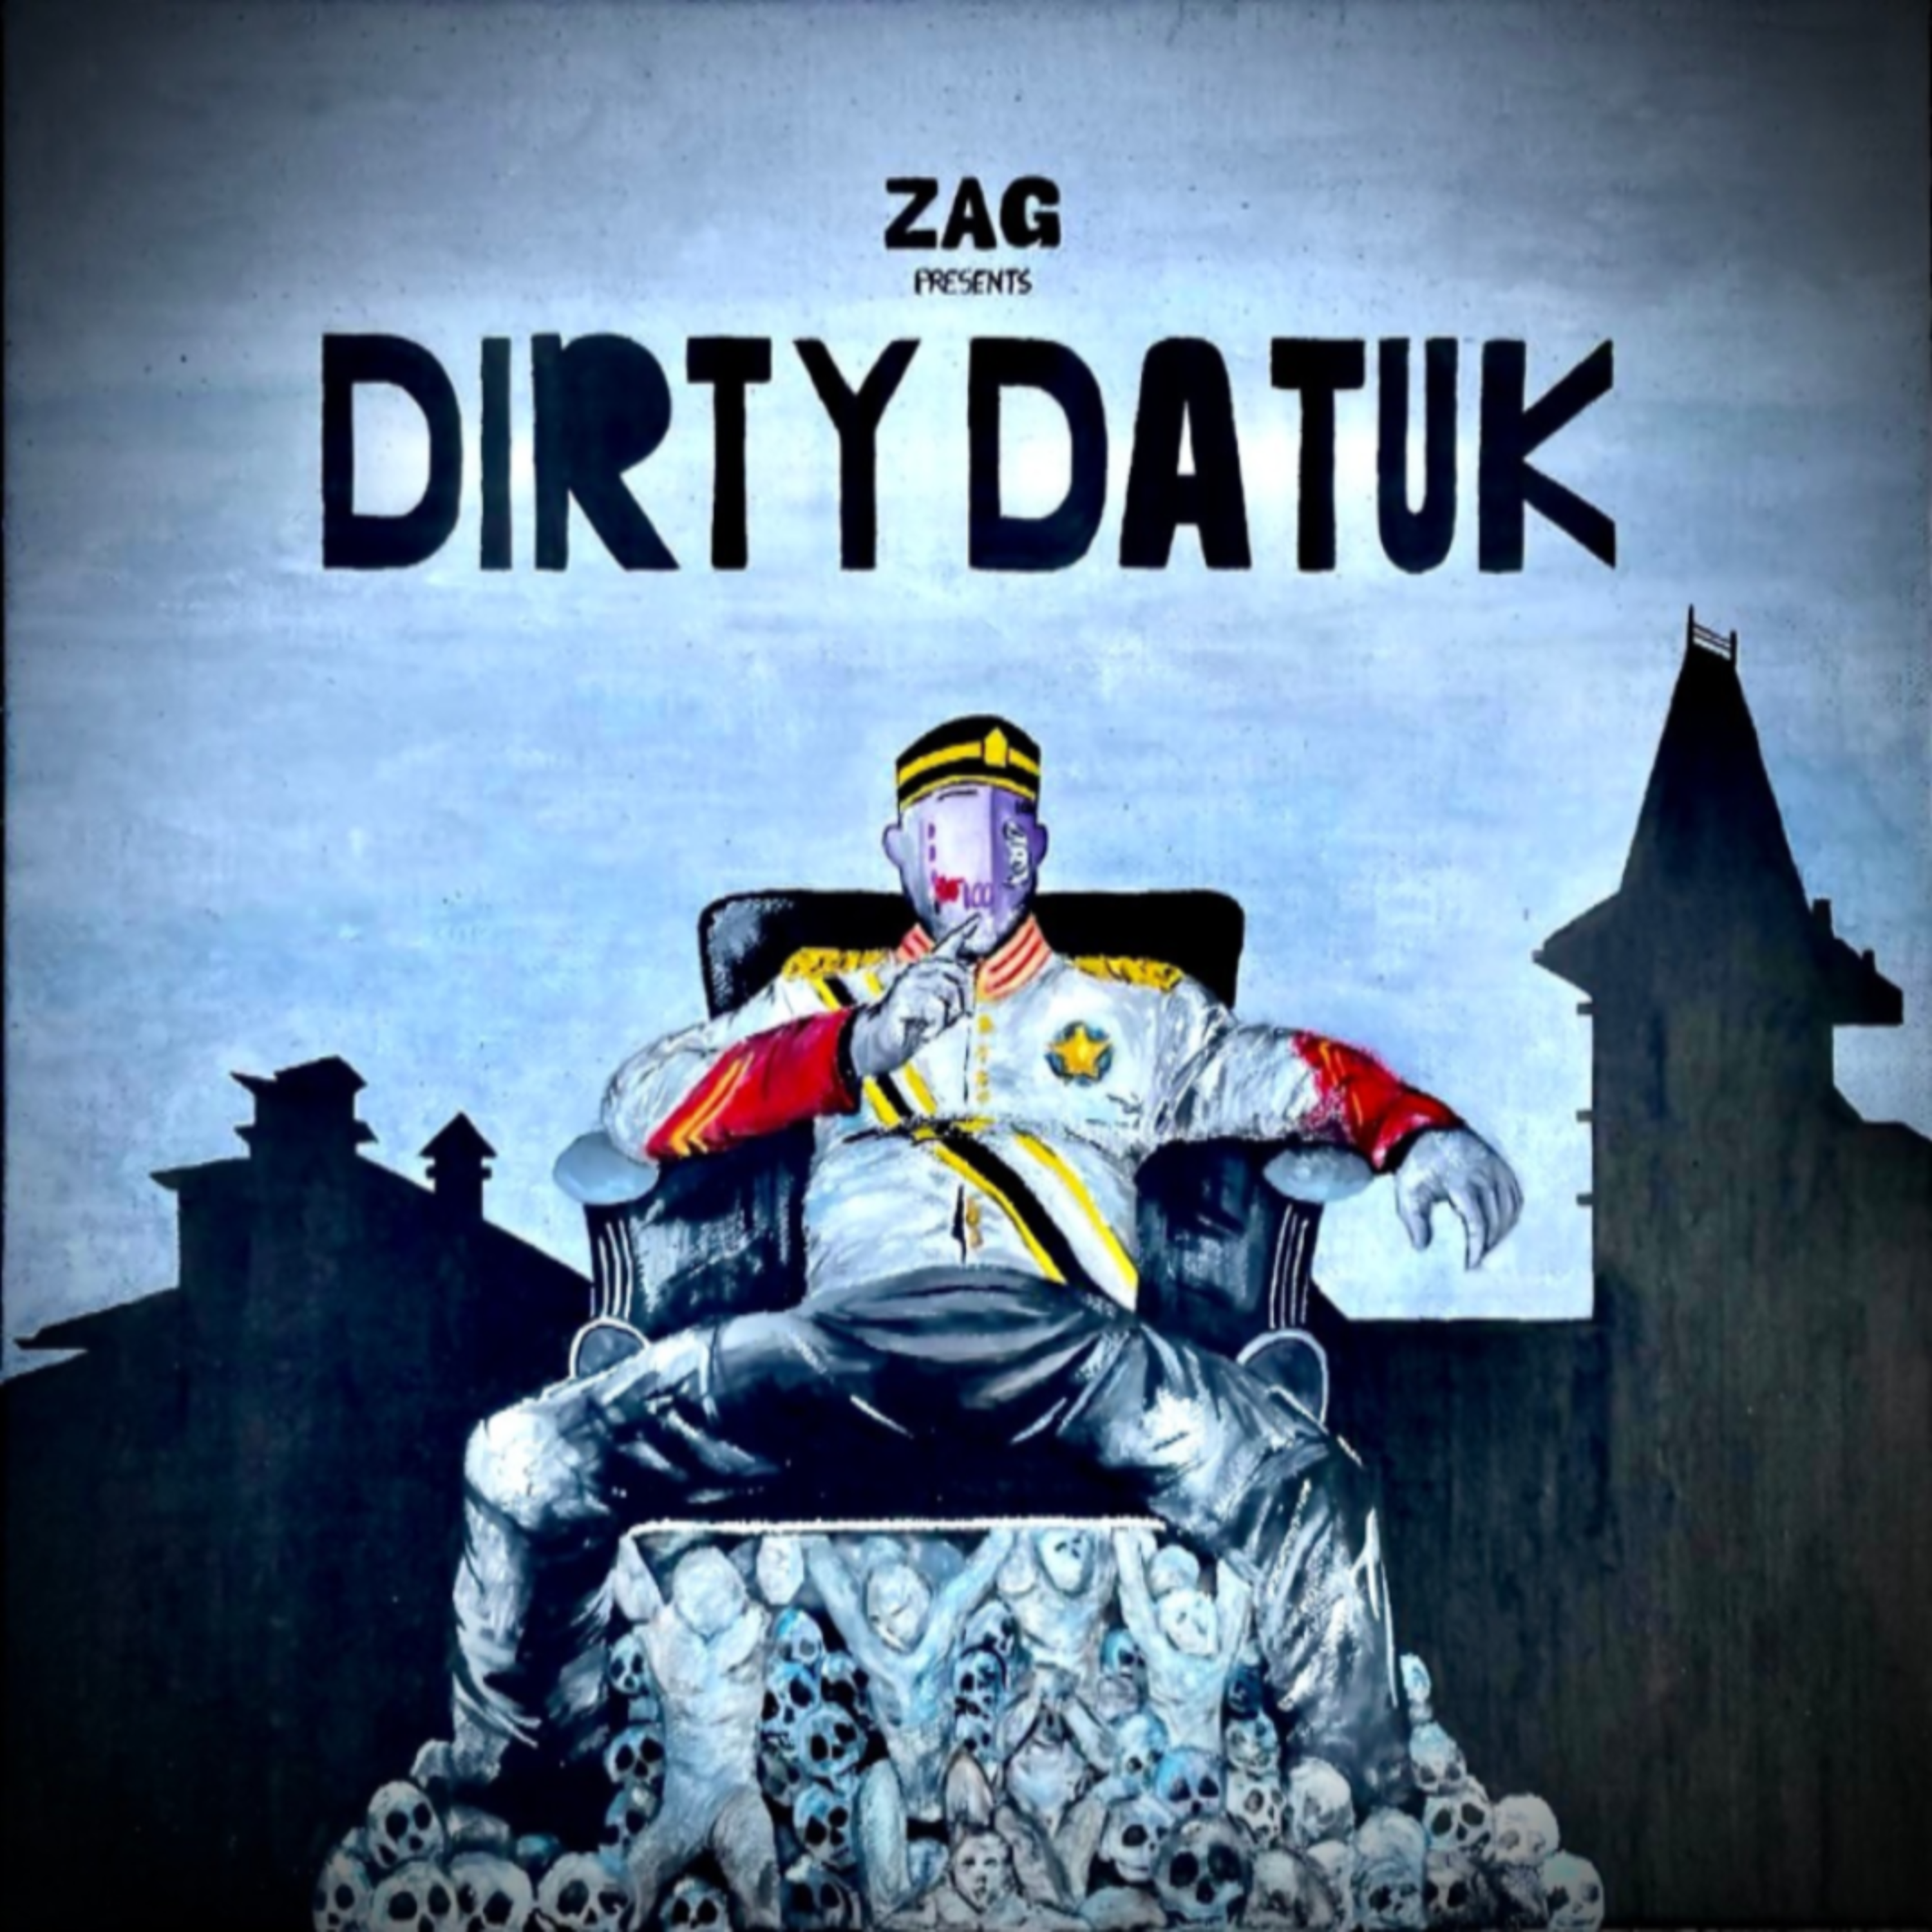 Dirty Datuk (Trailer)